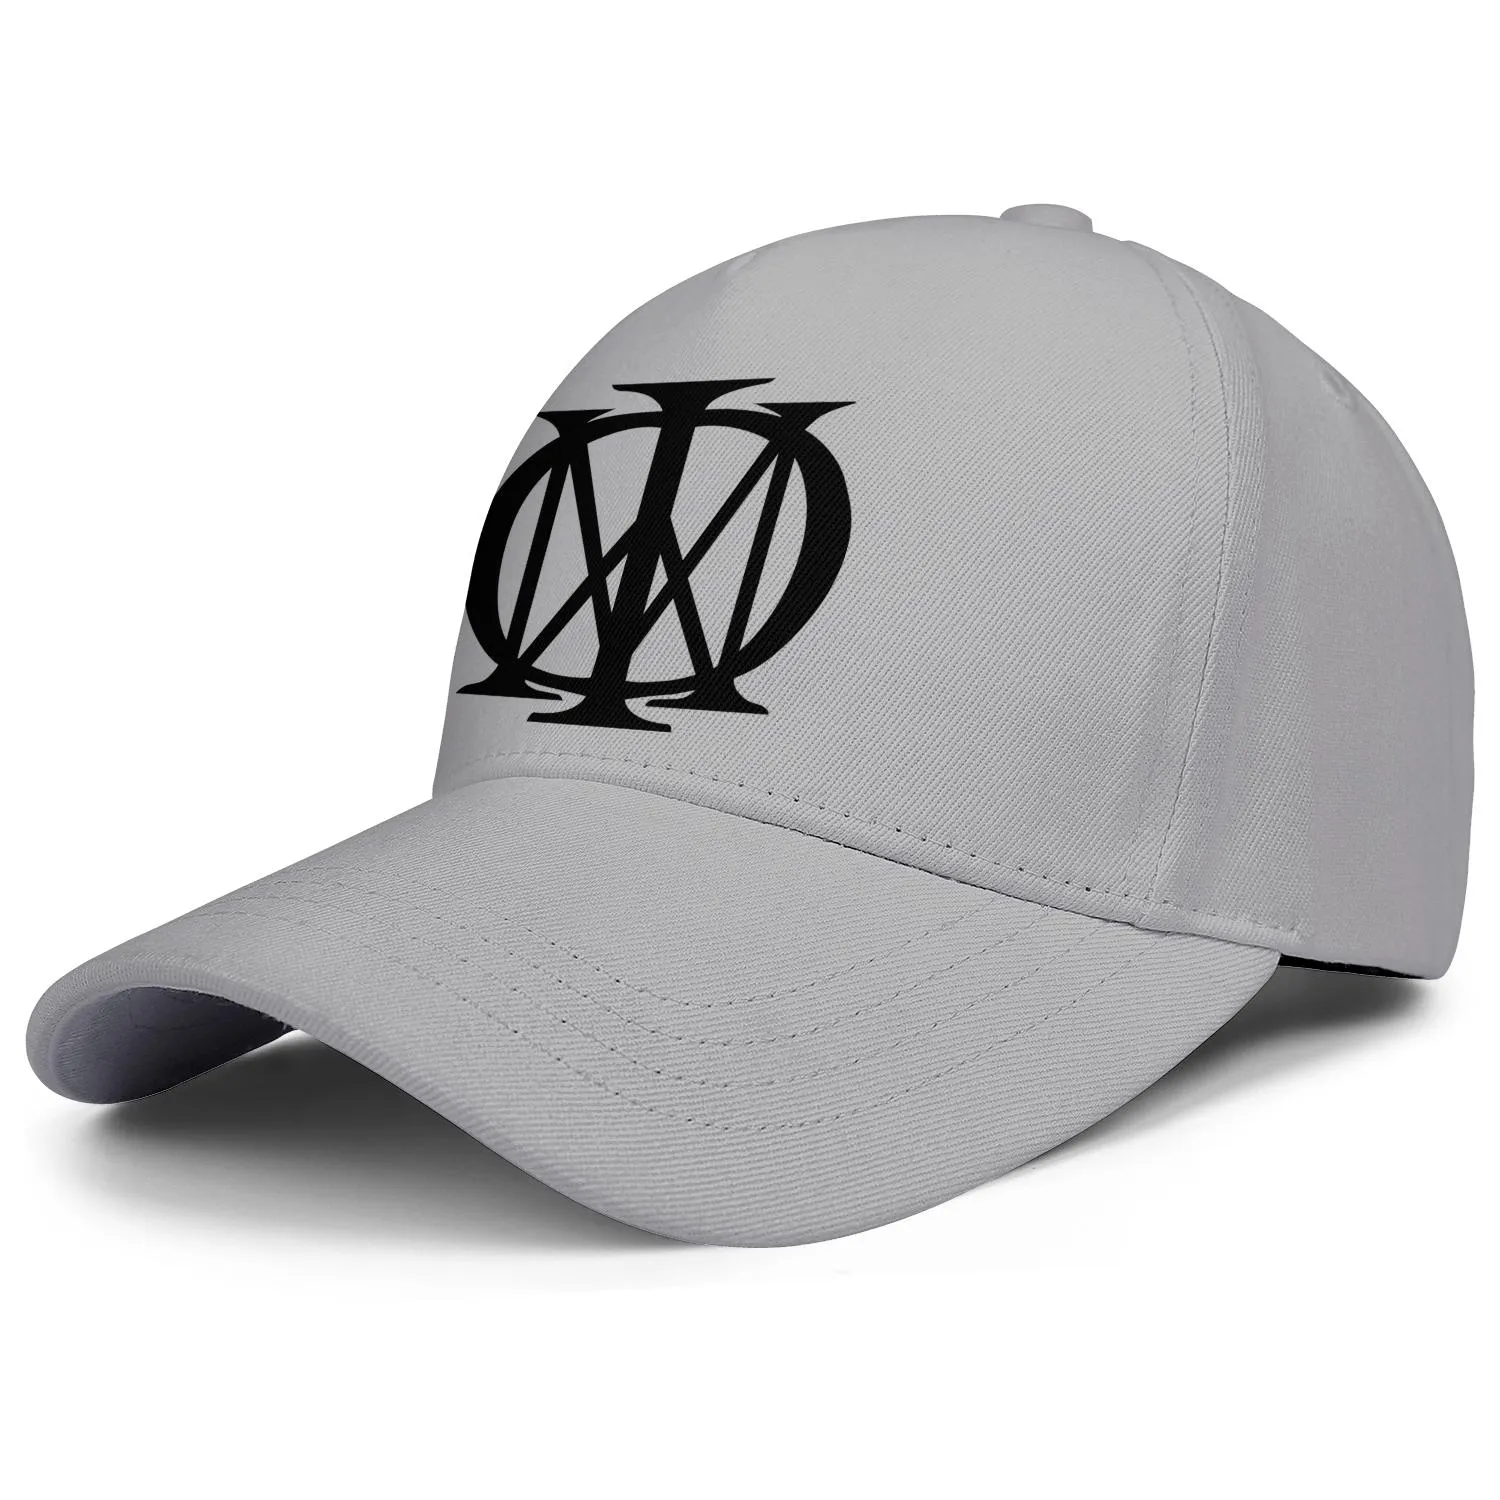 Moda Dream Theater logo Boné de beisebol unissex equipado elegante Trucke Hats DREAM THEATER Progressive Rock Music símbolo clássico477001012717